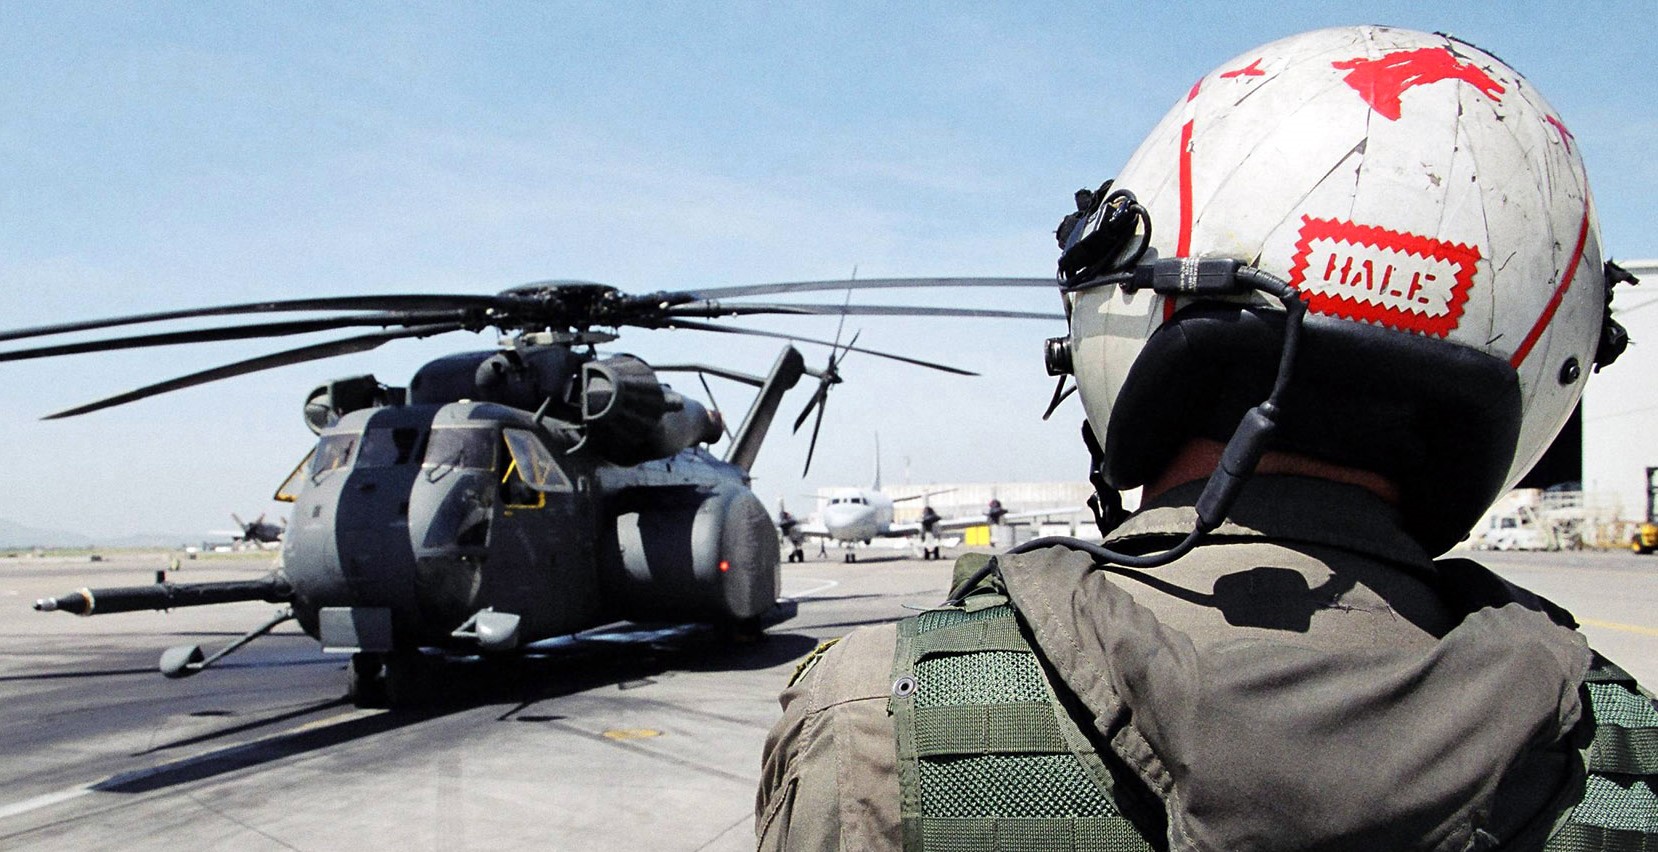 hc-4 black stallions helicopter combat support squadron mh-53e sea dragon 12